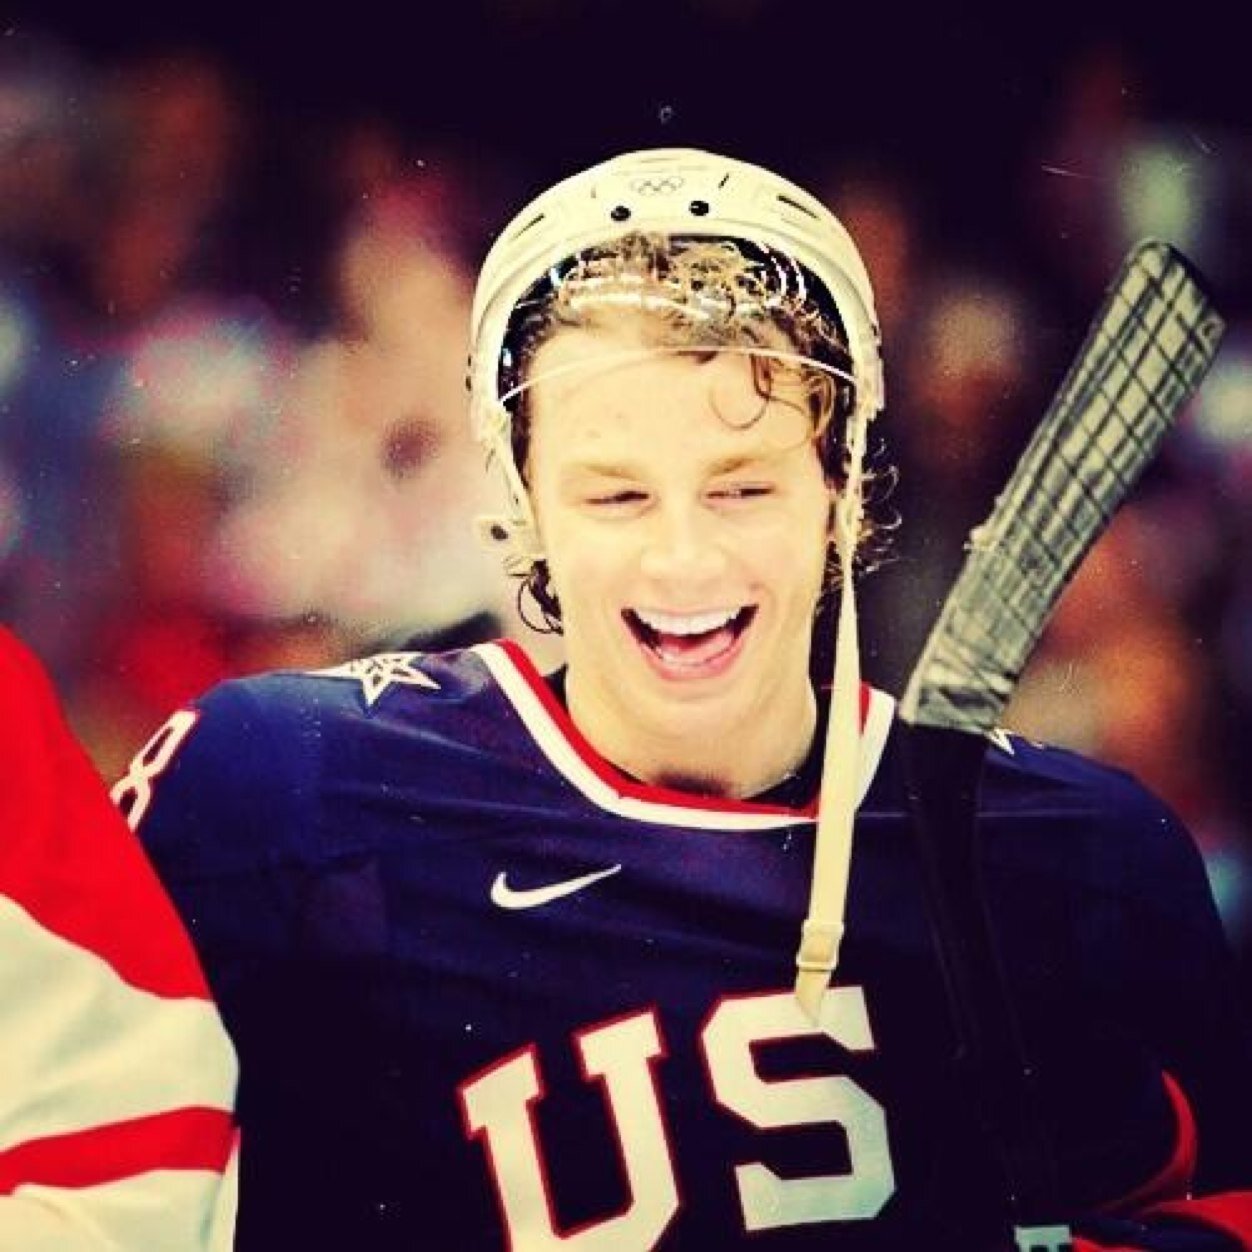 Hot Hockey Players 2013 - Hottest NHL. 